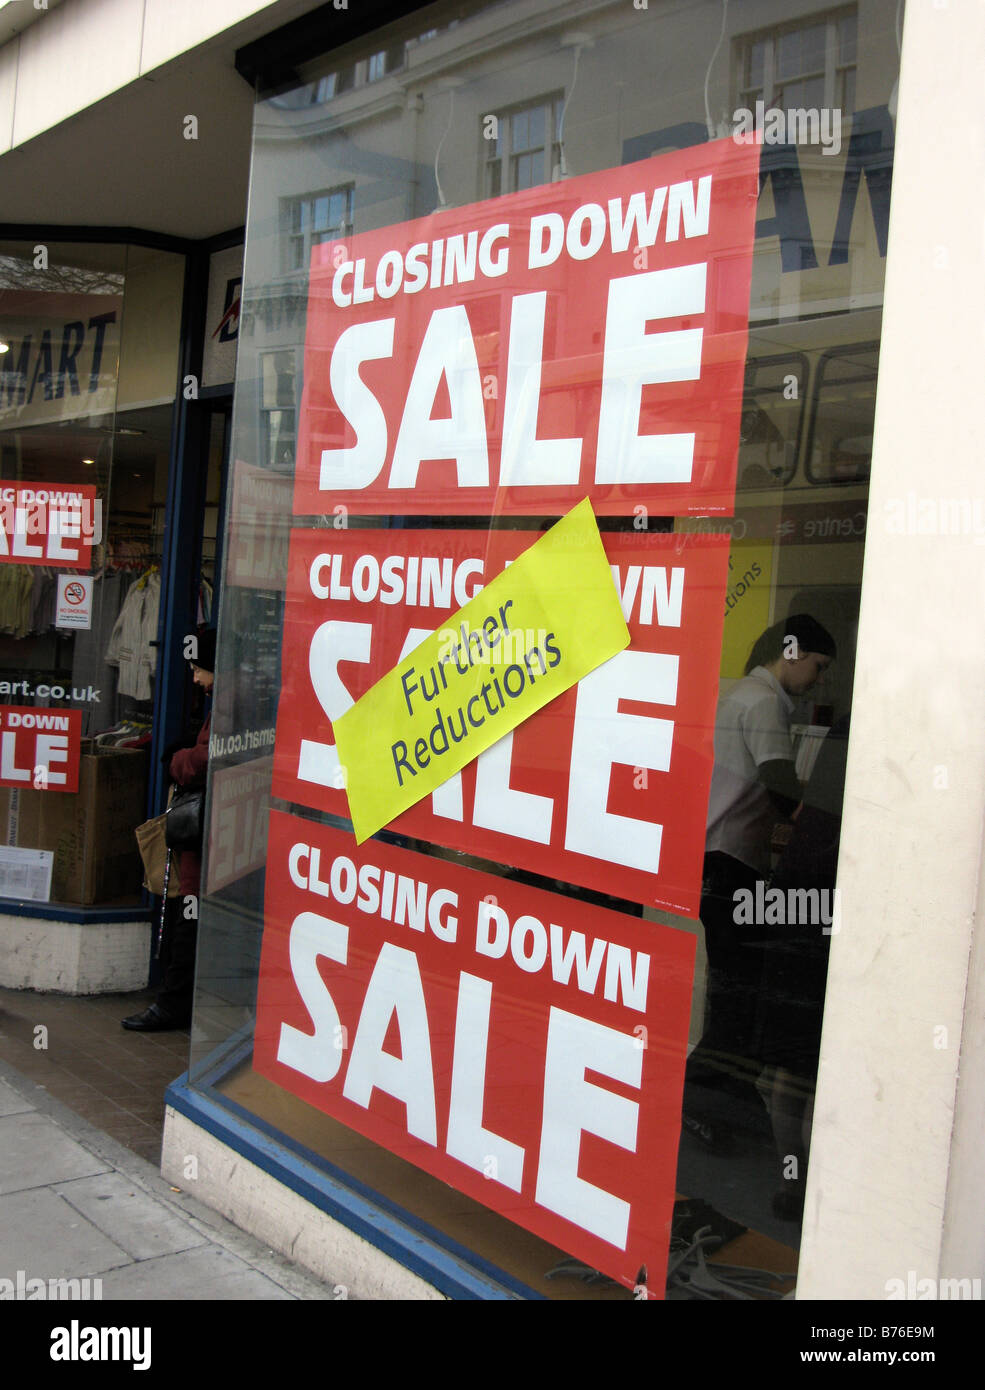 Damart clothes shop Brighton East Sussex closing down sale Stock Photo -  Alamy